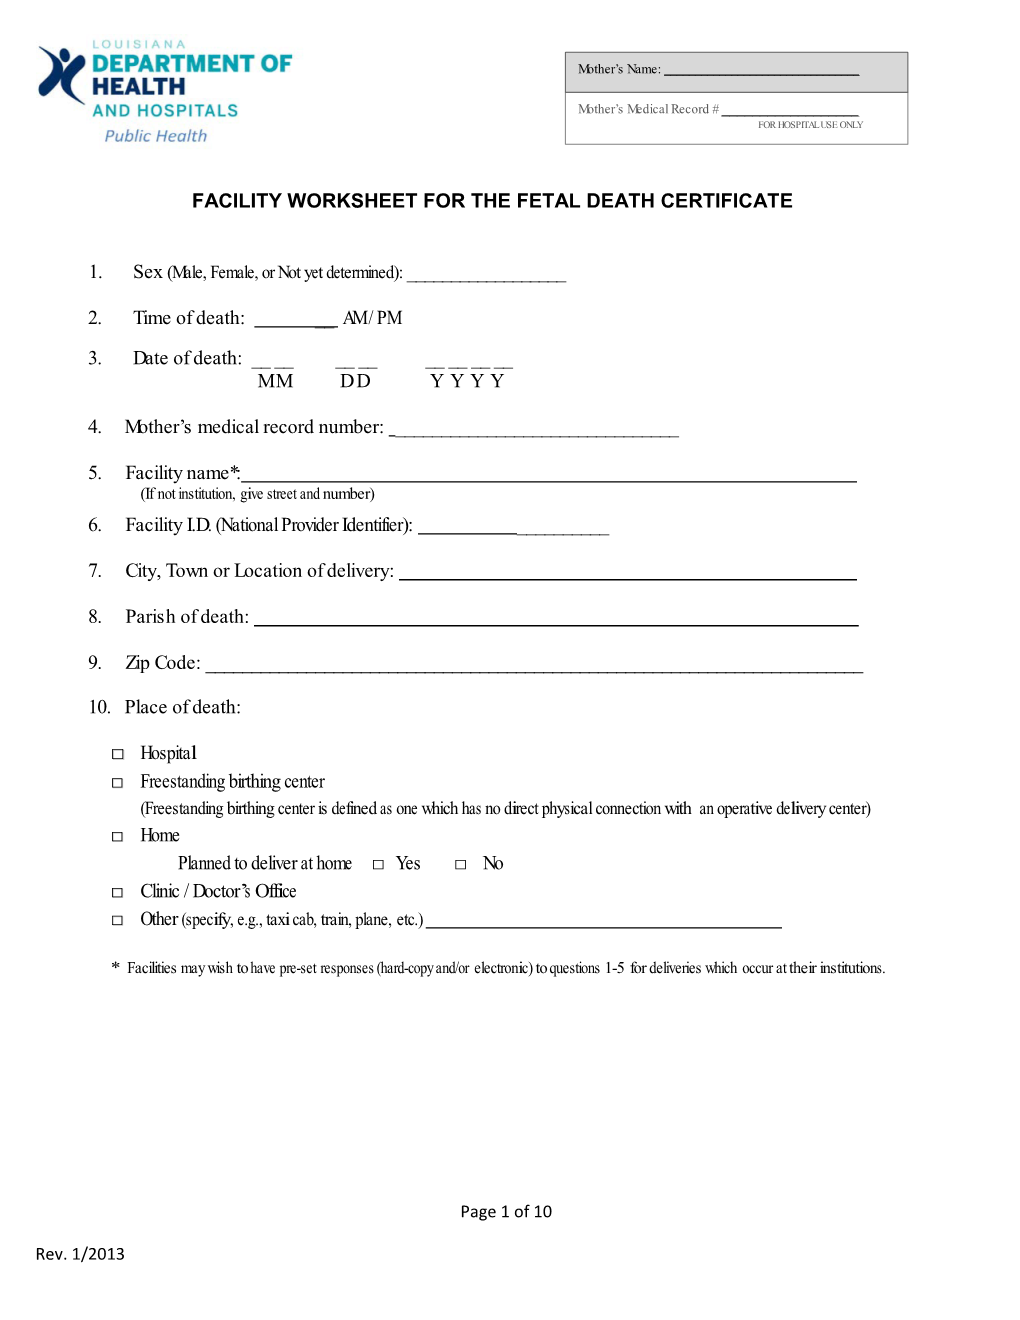 Fetal Death Facility Worksheet